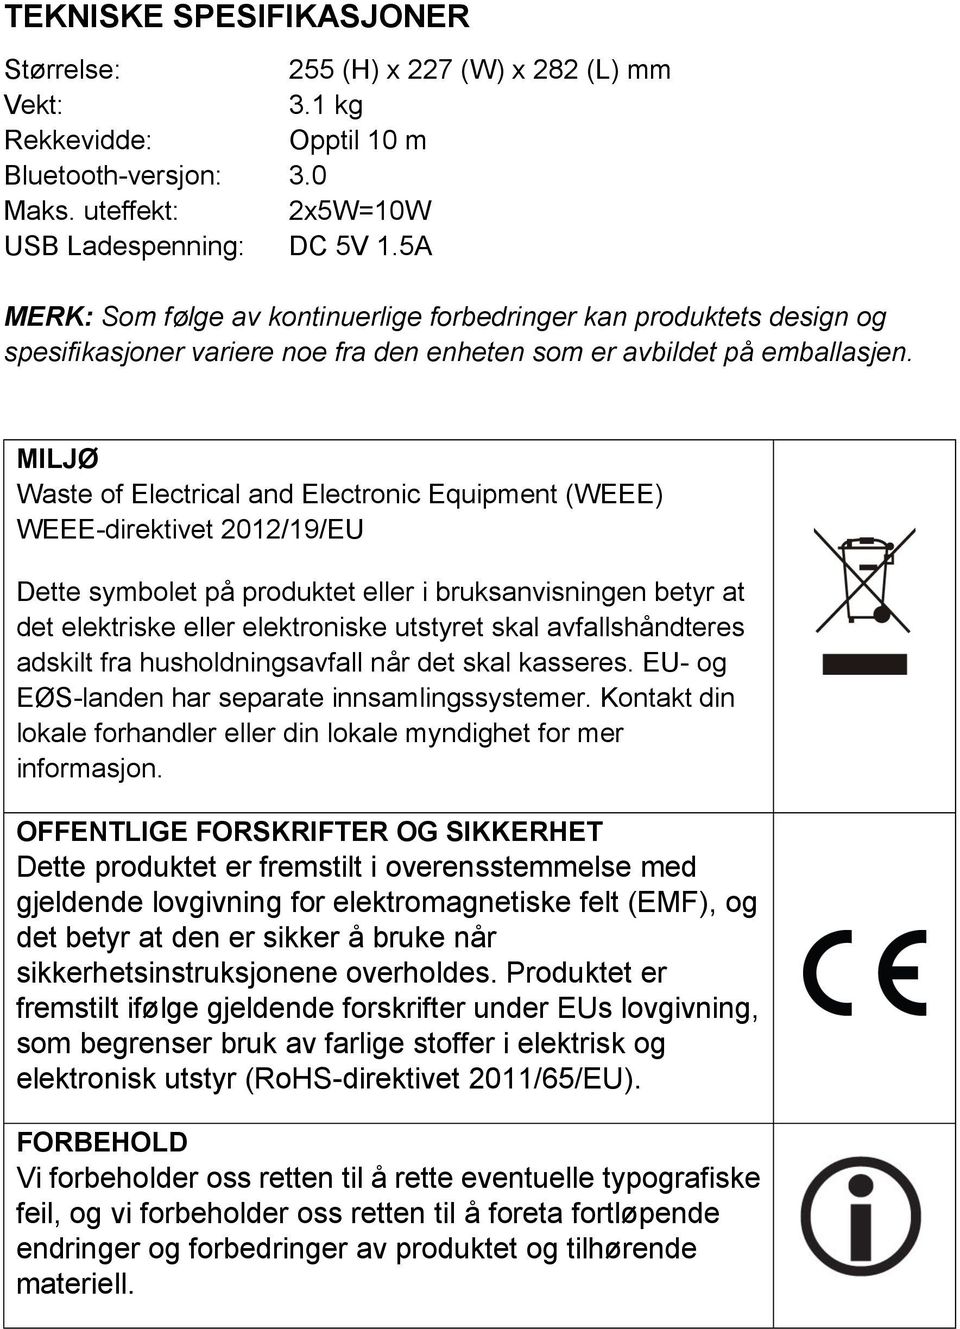 MILJØ Waste of Electrical and Electronic Equipment (WEEE) WEEE-direktivet 2012/19/EU Dette symbolet på produktet eller i bruksanvisningen betyr at det elektriske eller elektroniske utstyret skal